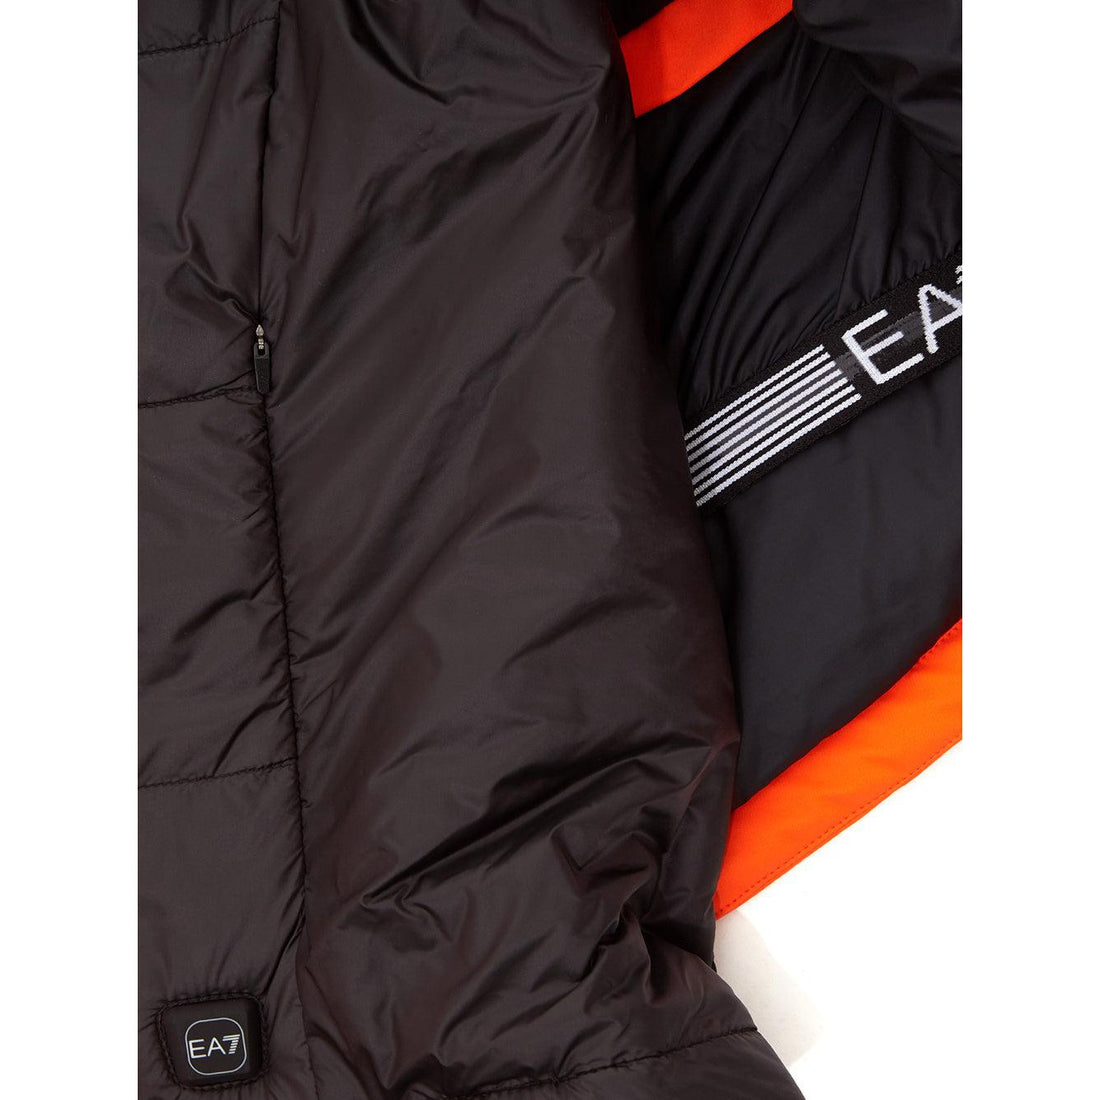 EA7 Emporio Armani Orange Winter Jacket with Removable Sleeveless vest